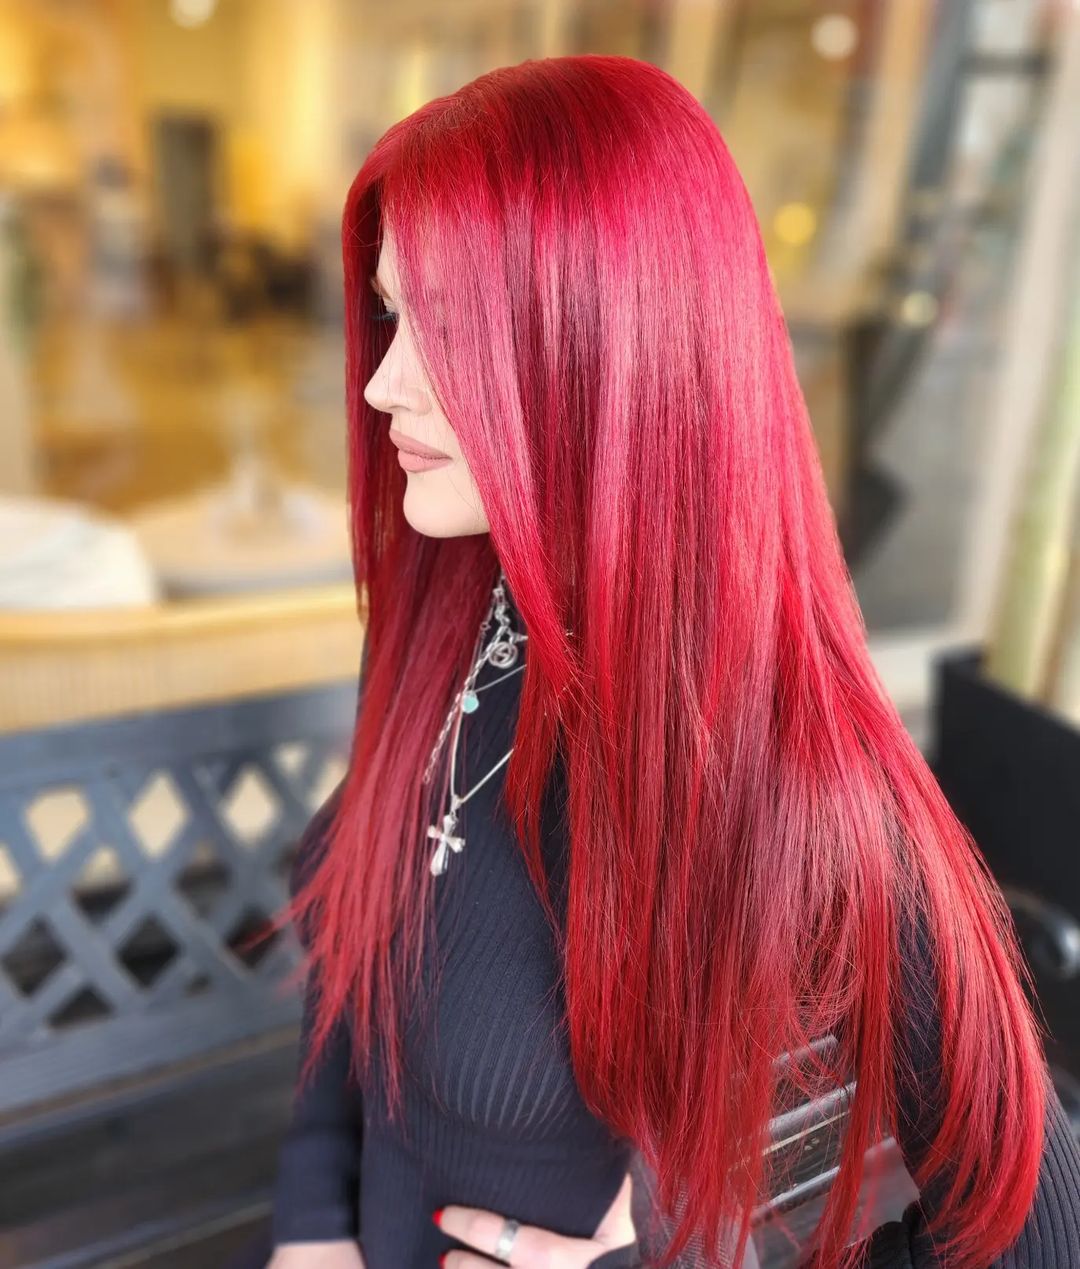 pelo rojo brillante